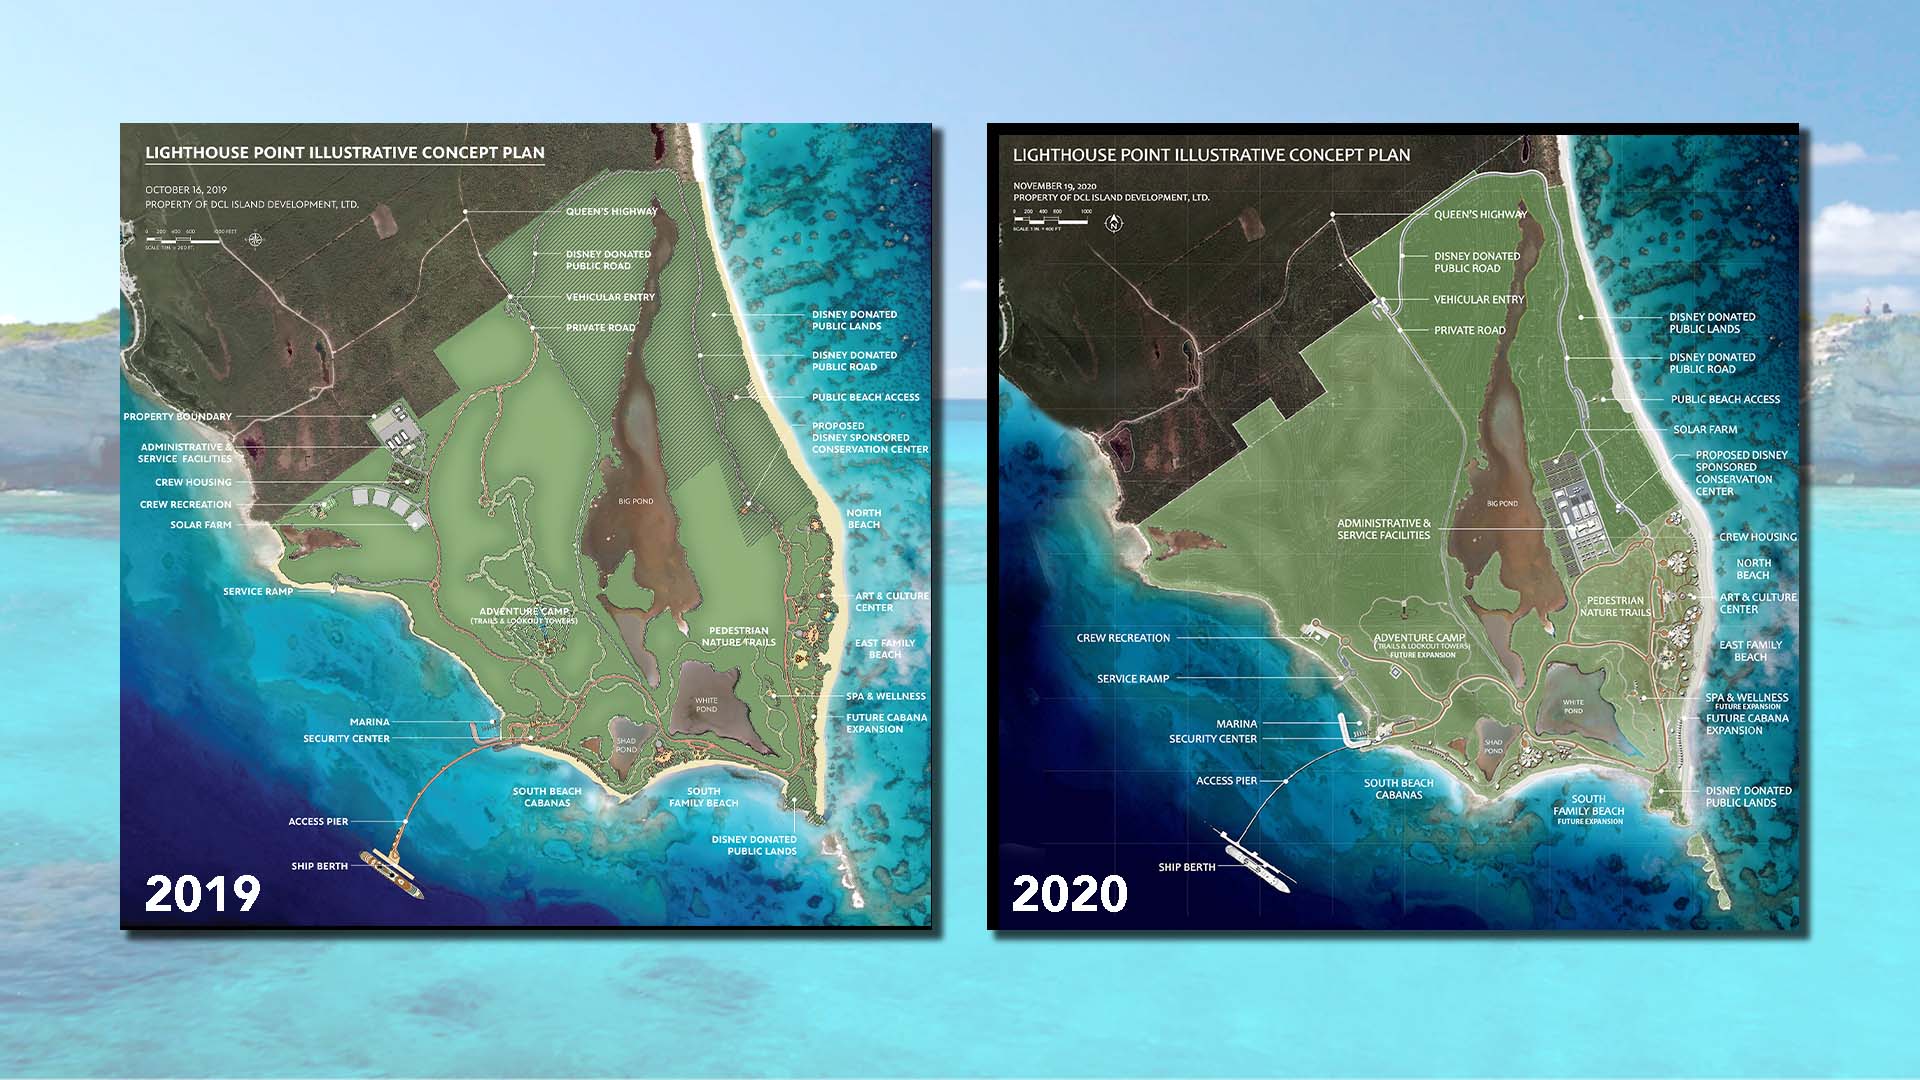 Lighthouse Point Concept Plan 2019 Vs 2020